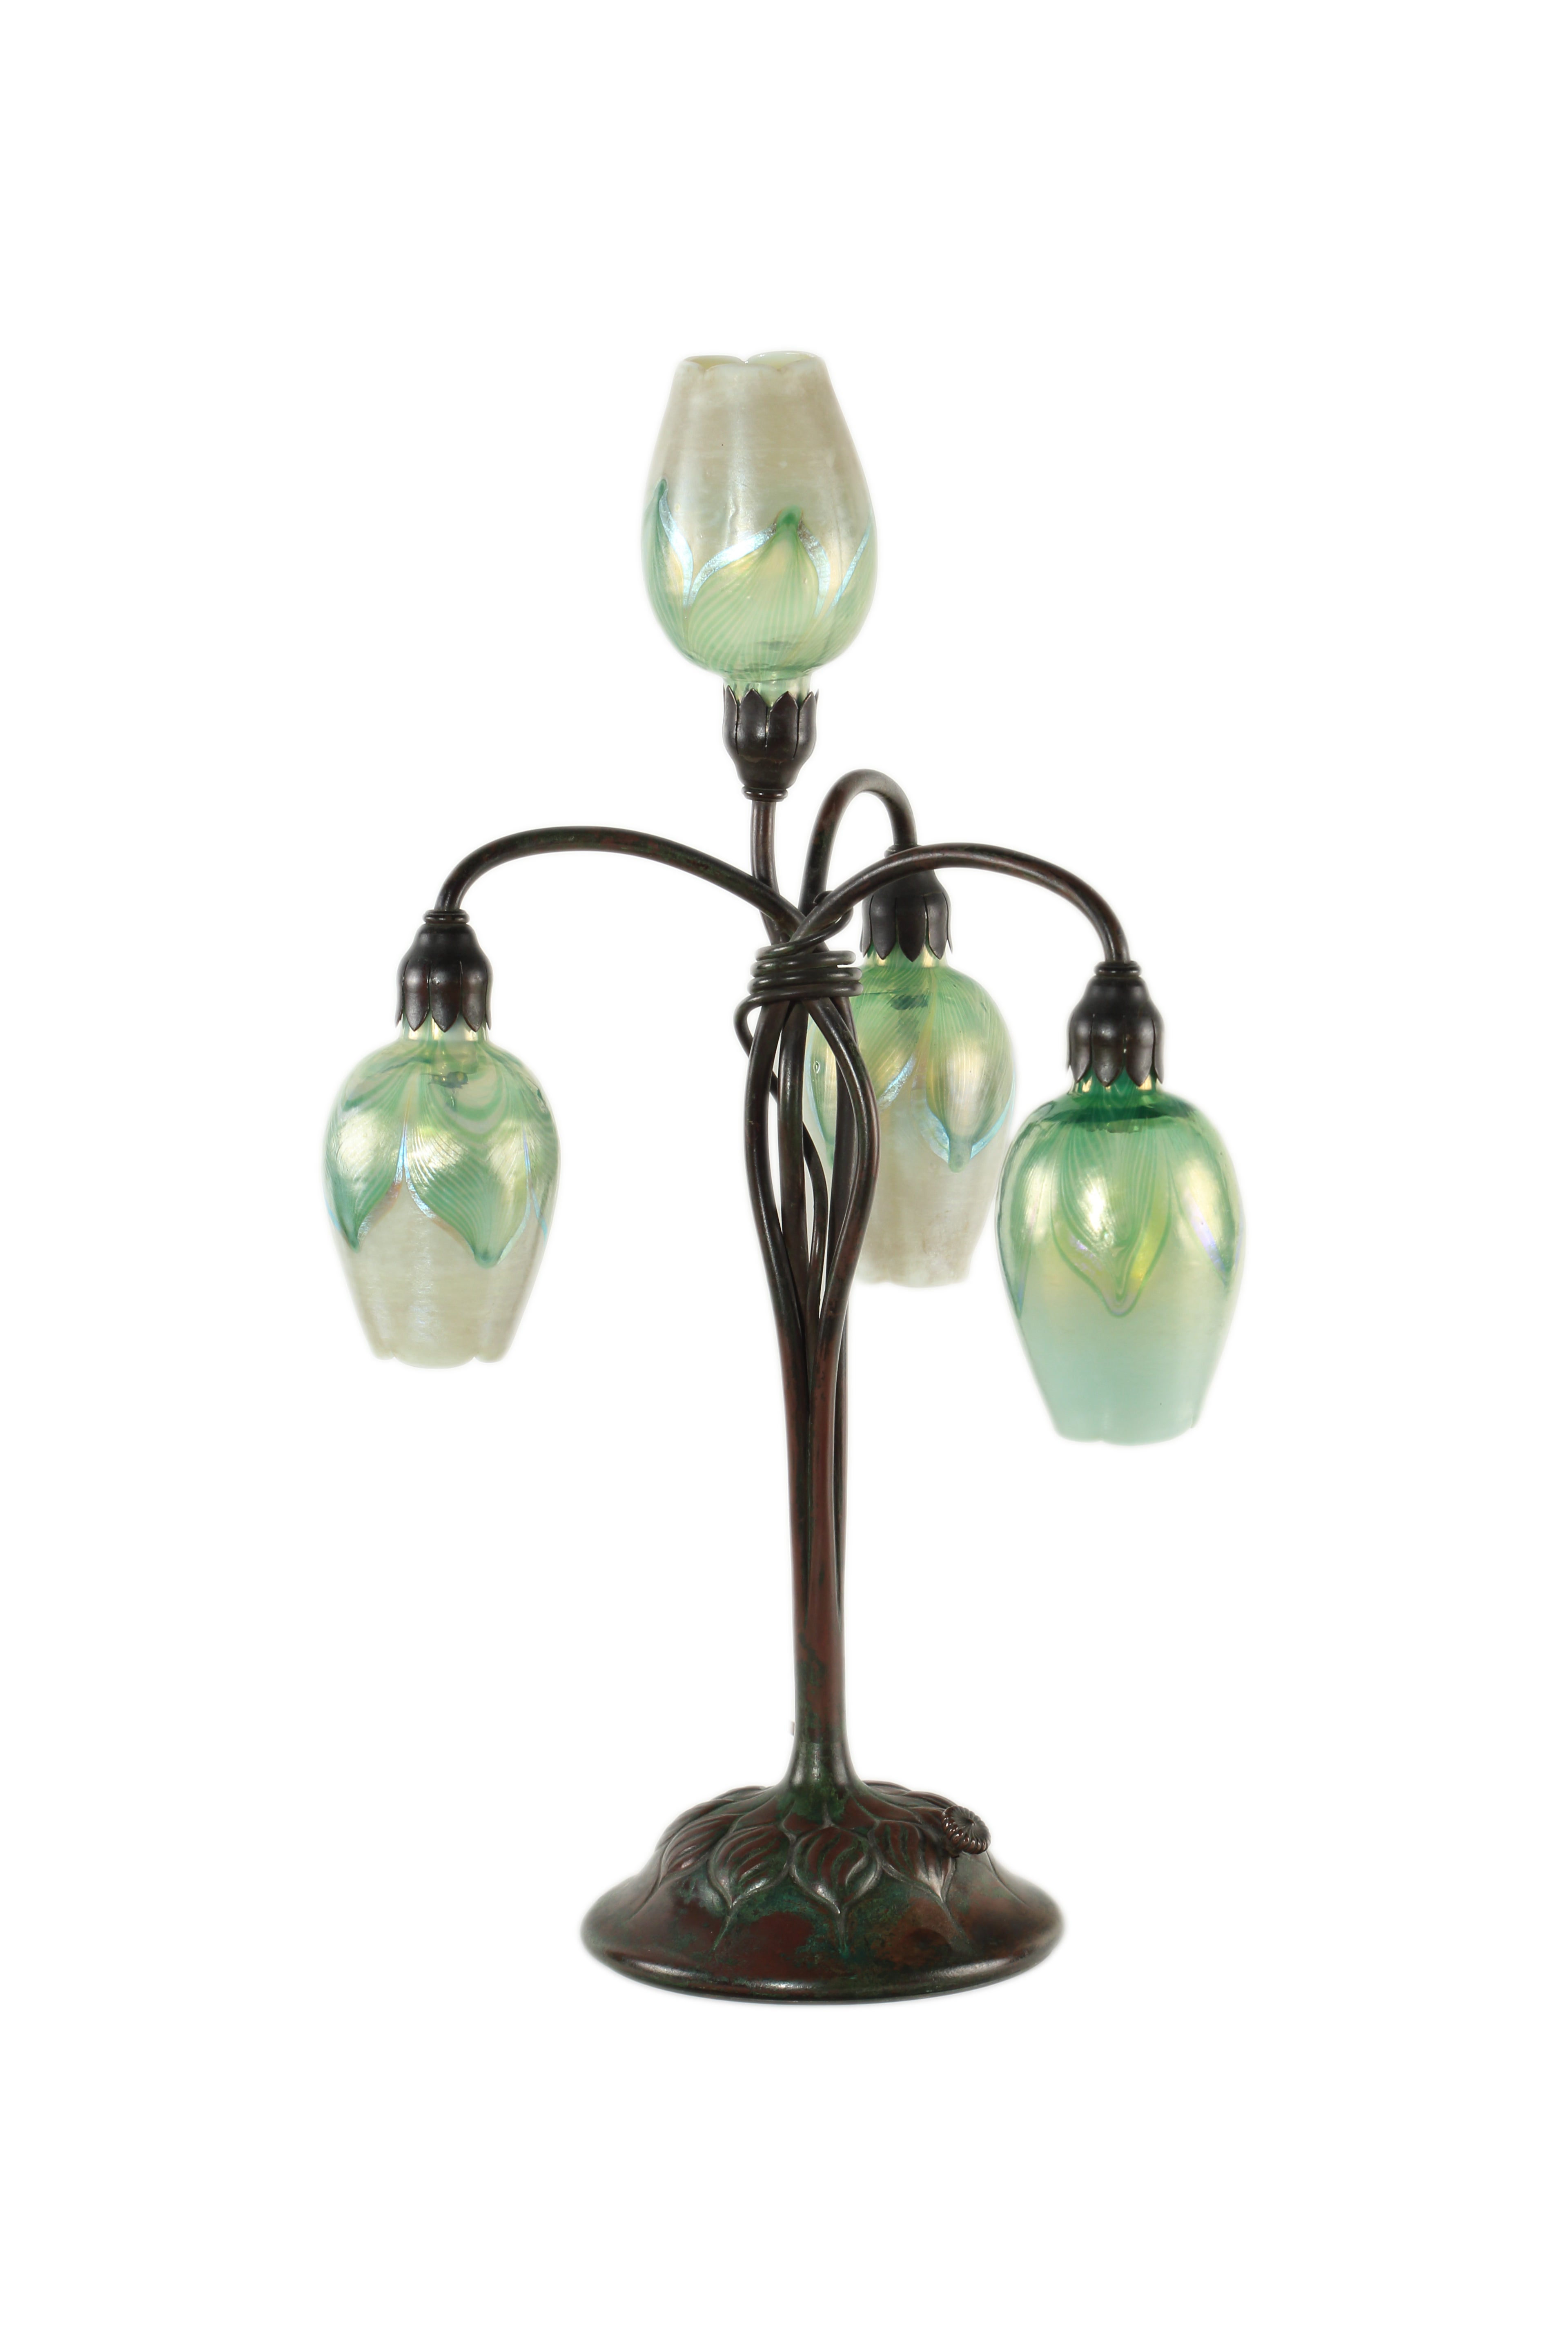 Tiffany Studios Four Light Lily Table Lamp